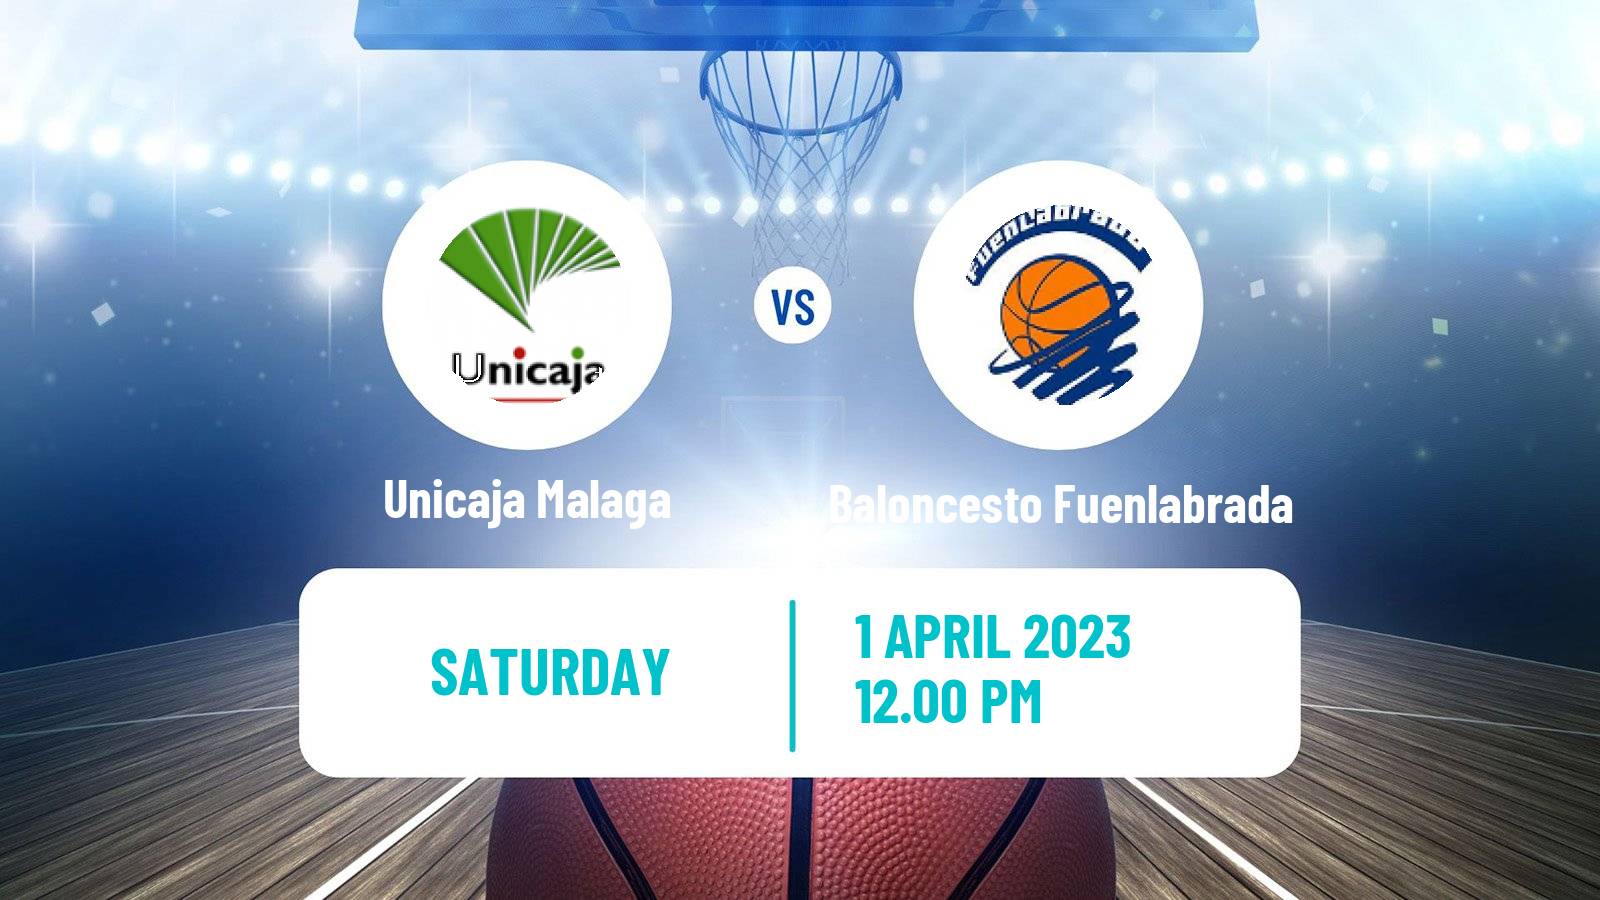 Basketball Spanish ACB League Unicaja Malaga - Baloncesto Fuenlabrada